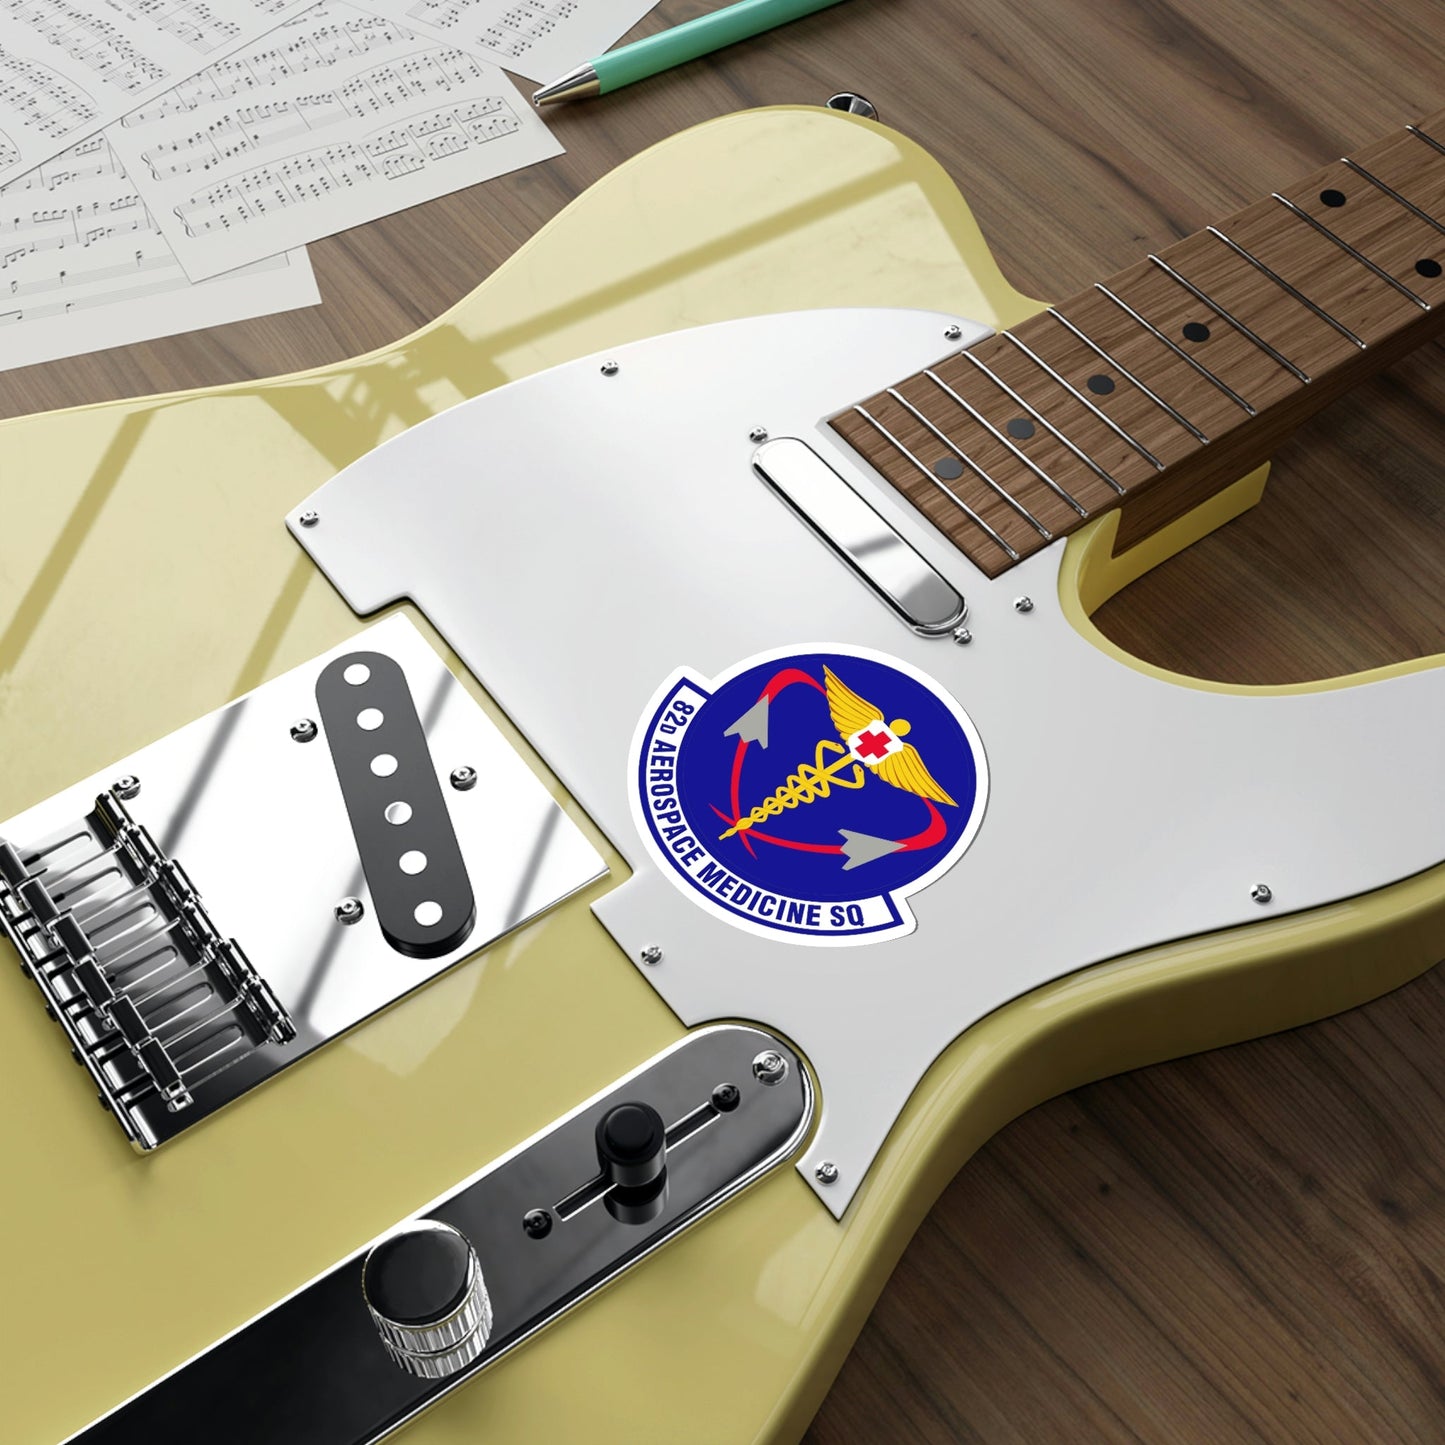 82d Aerospace Medicine Squadron (U.S. Air Force) STICKER Vinyl Die-Cut Decal-The Sticker Space